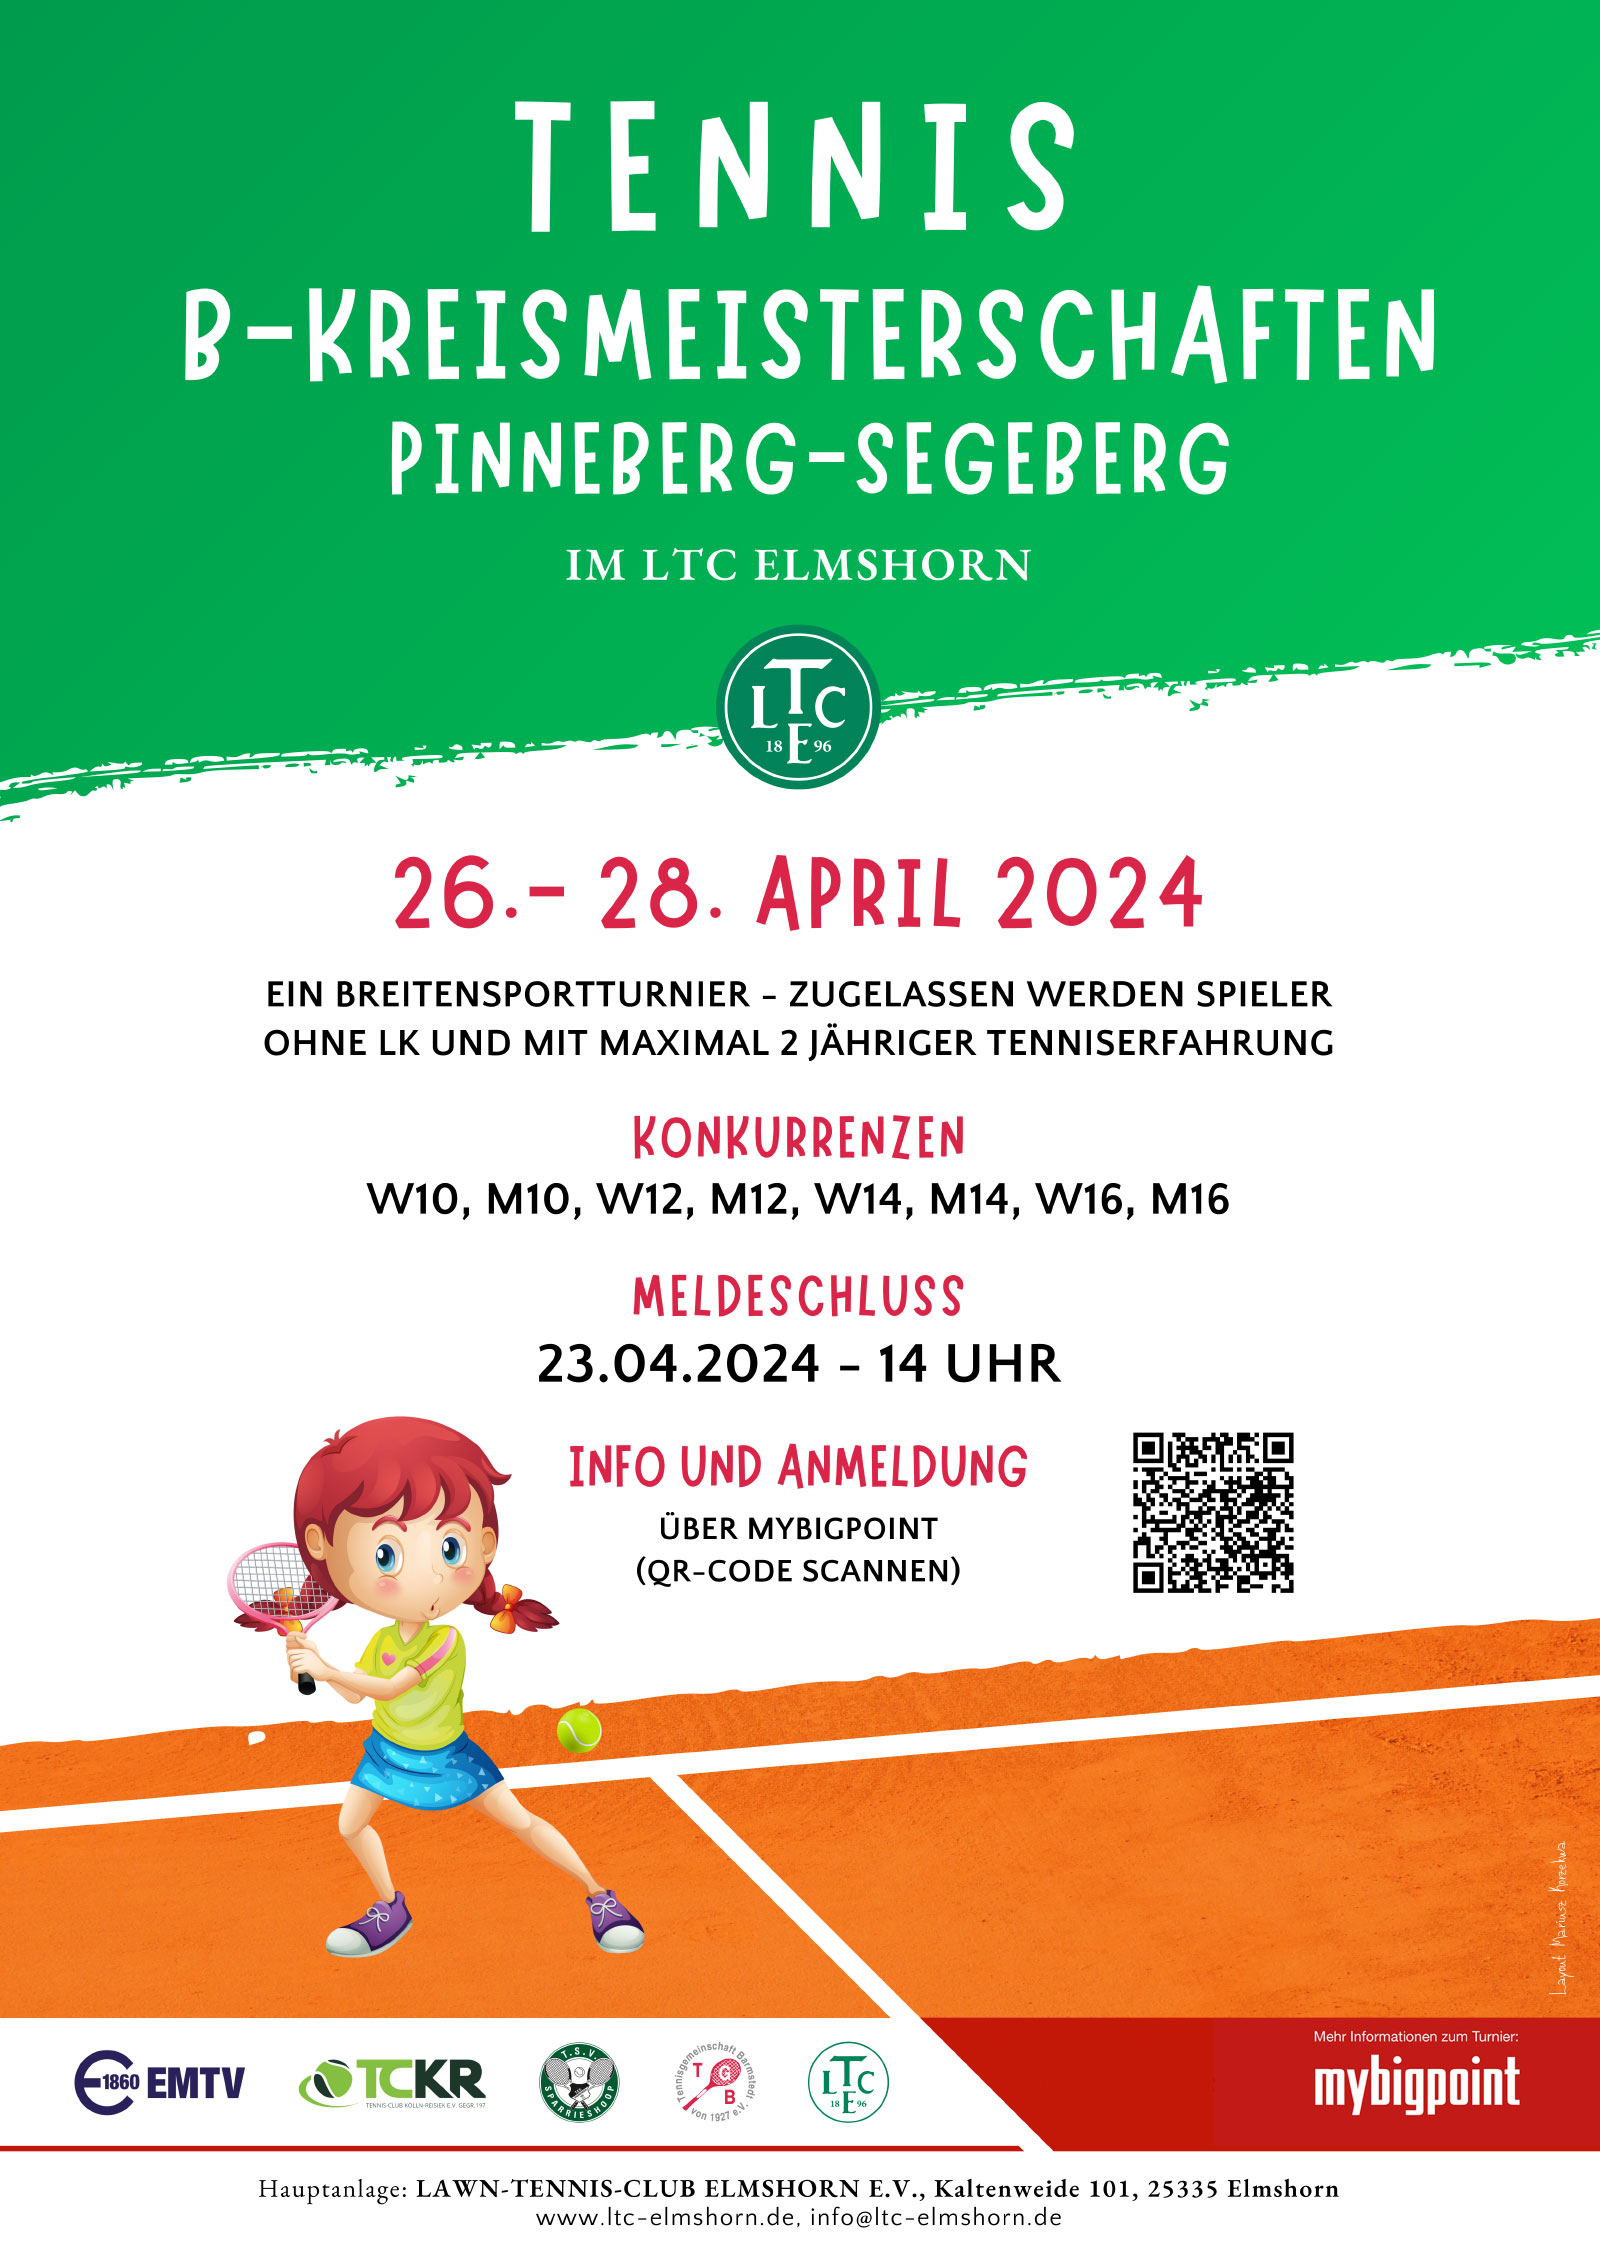 Tennis B-Kreismeisterschaften Pinneberg-Segeberg im LTCE